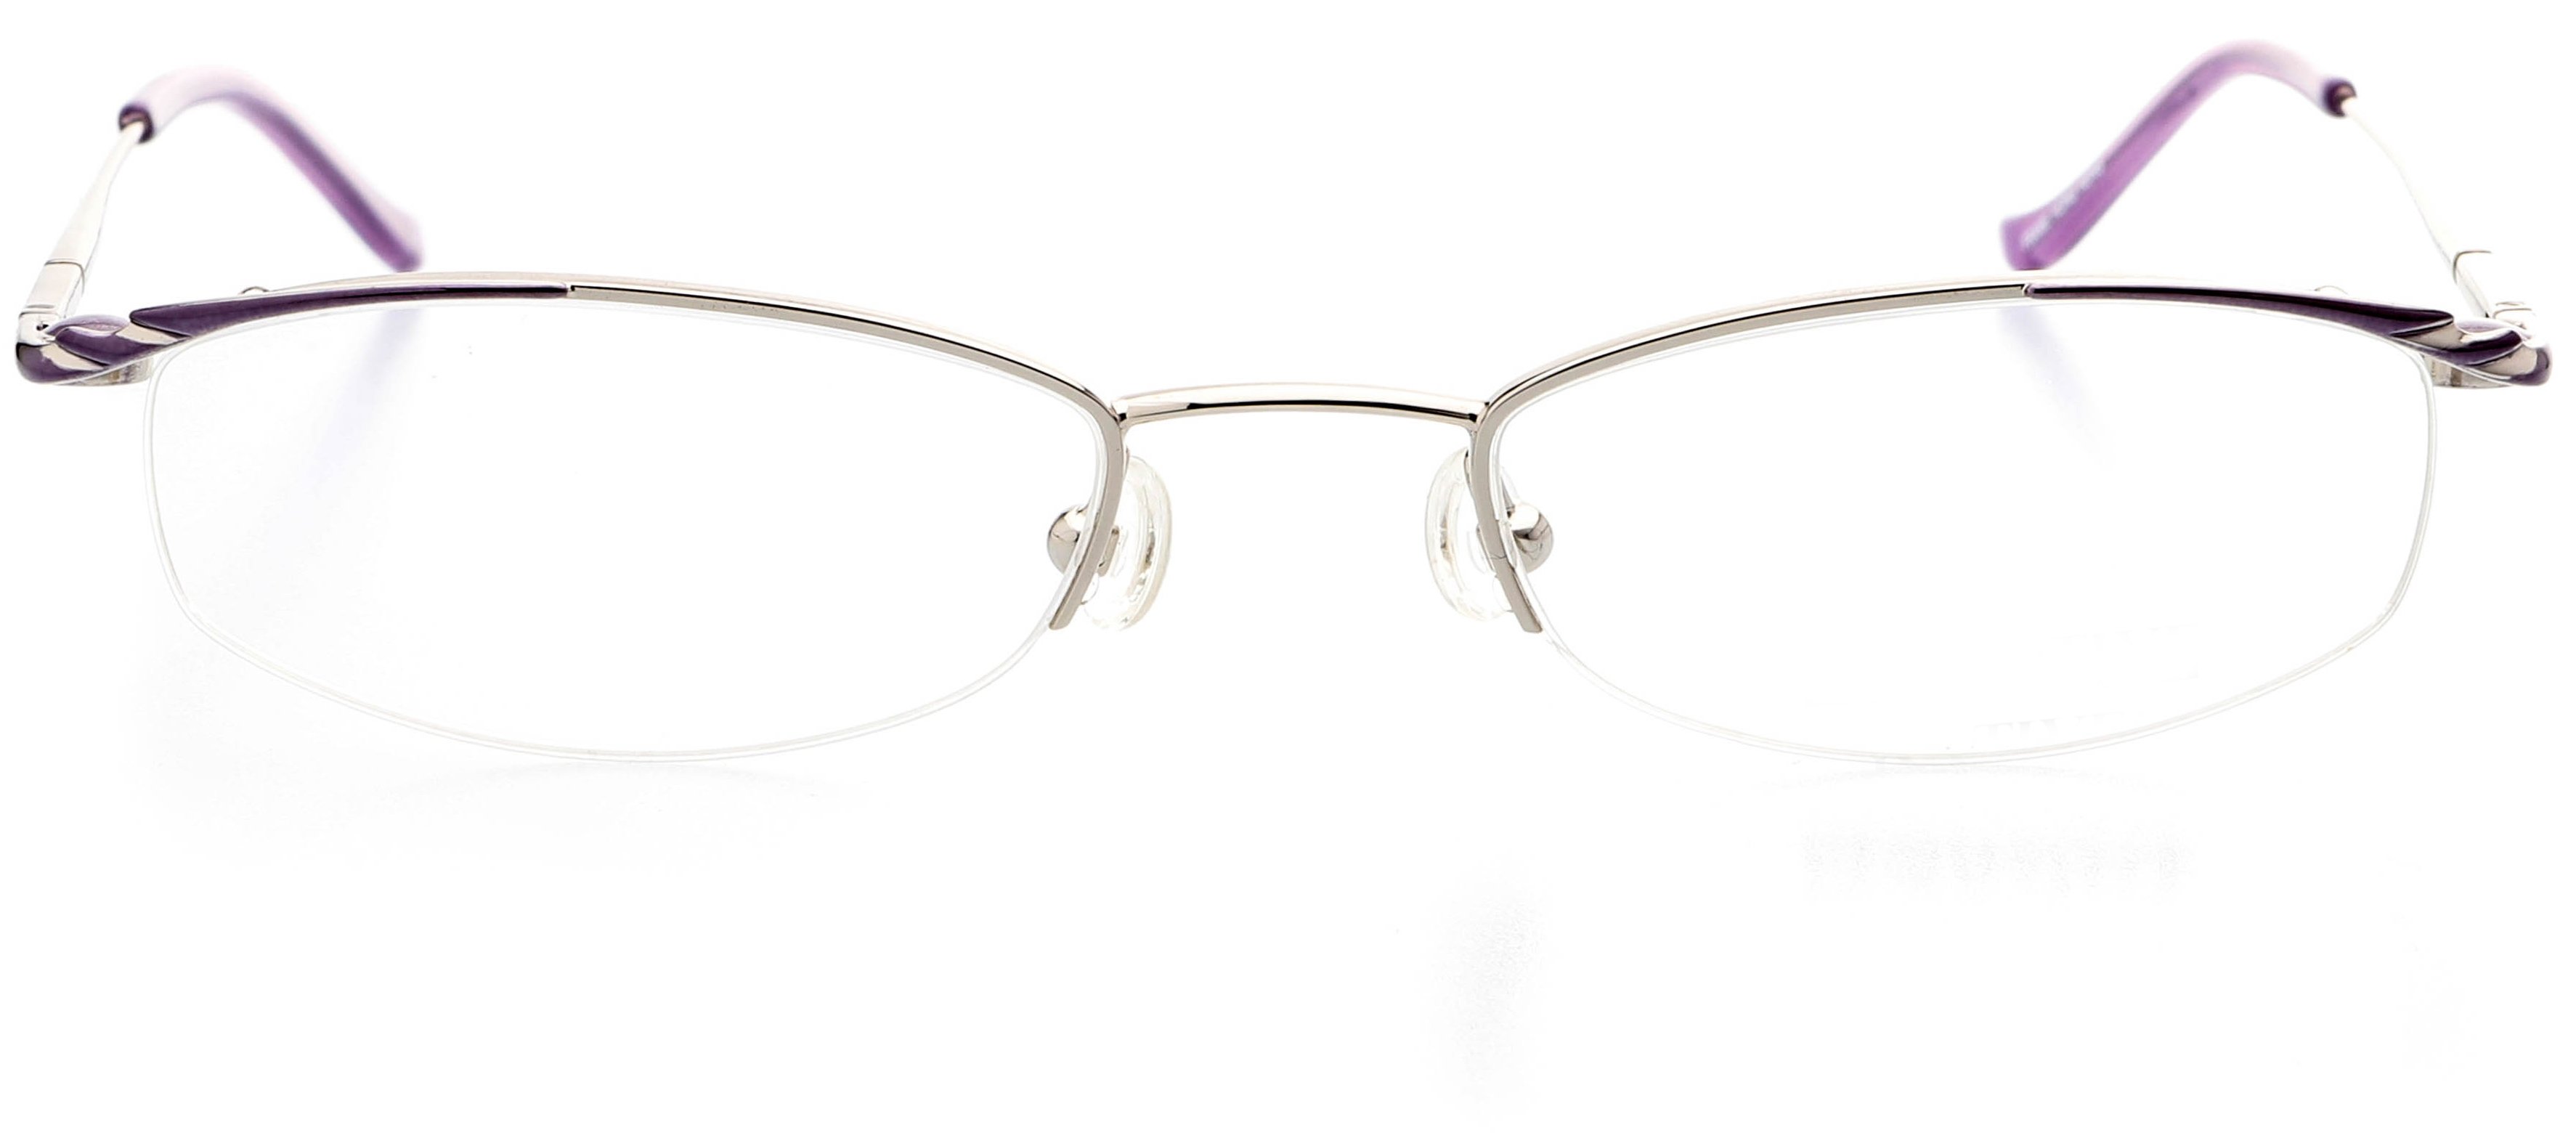 Hit Notion Optical Eyewear - Oval Shape, Metal Rimless Frame - Prescription Eyeglasses RX